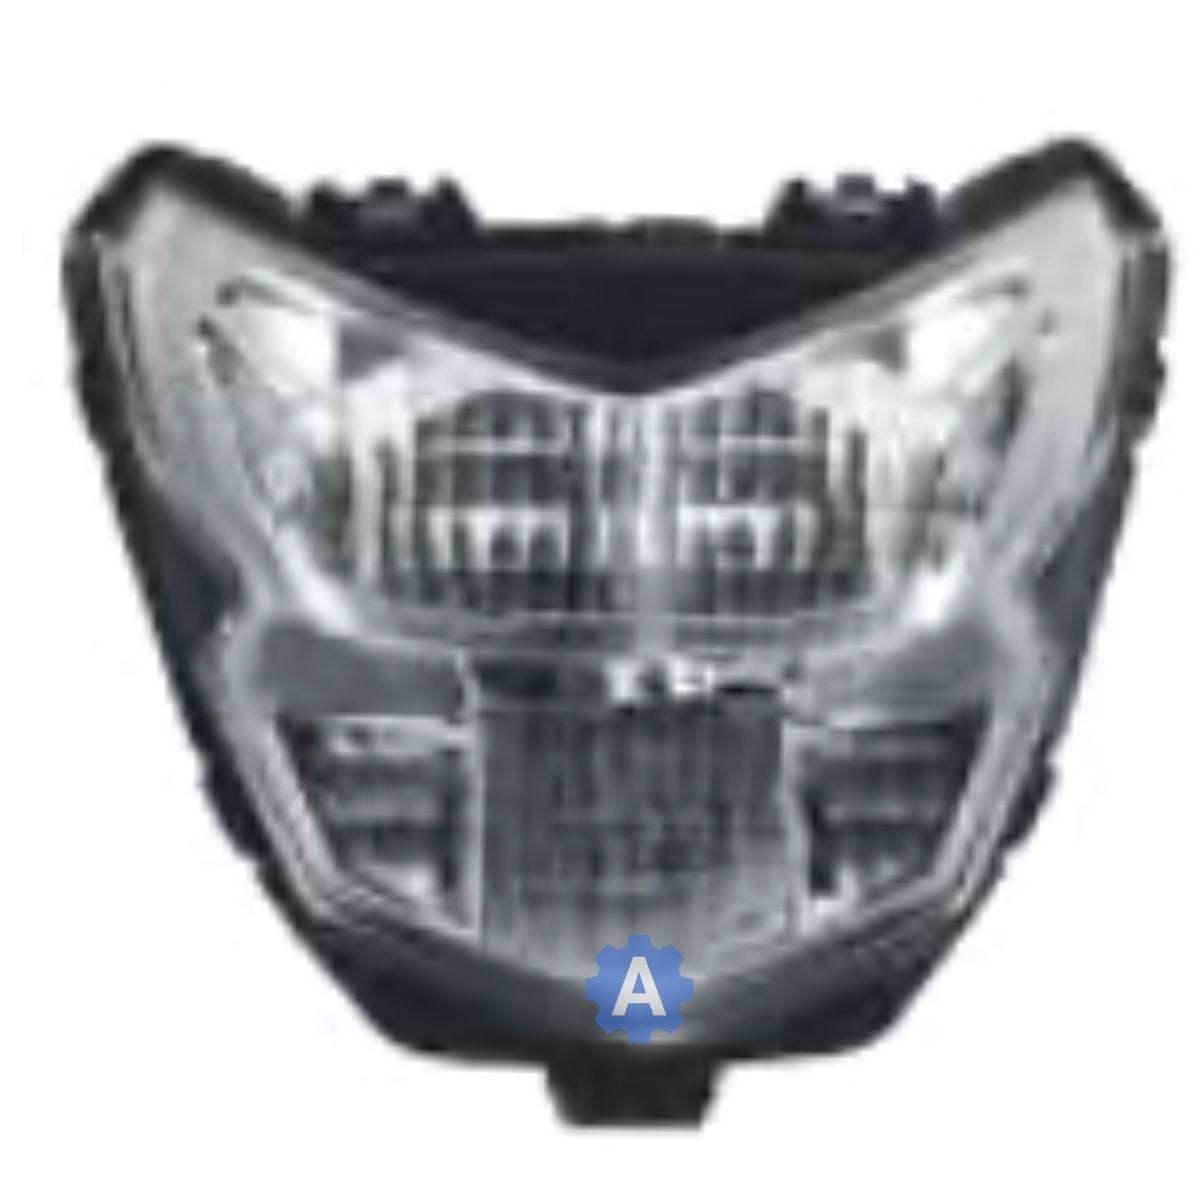 Extra LED Head Light For BS6 Bajaj Auto